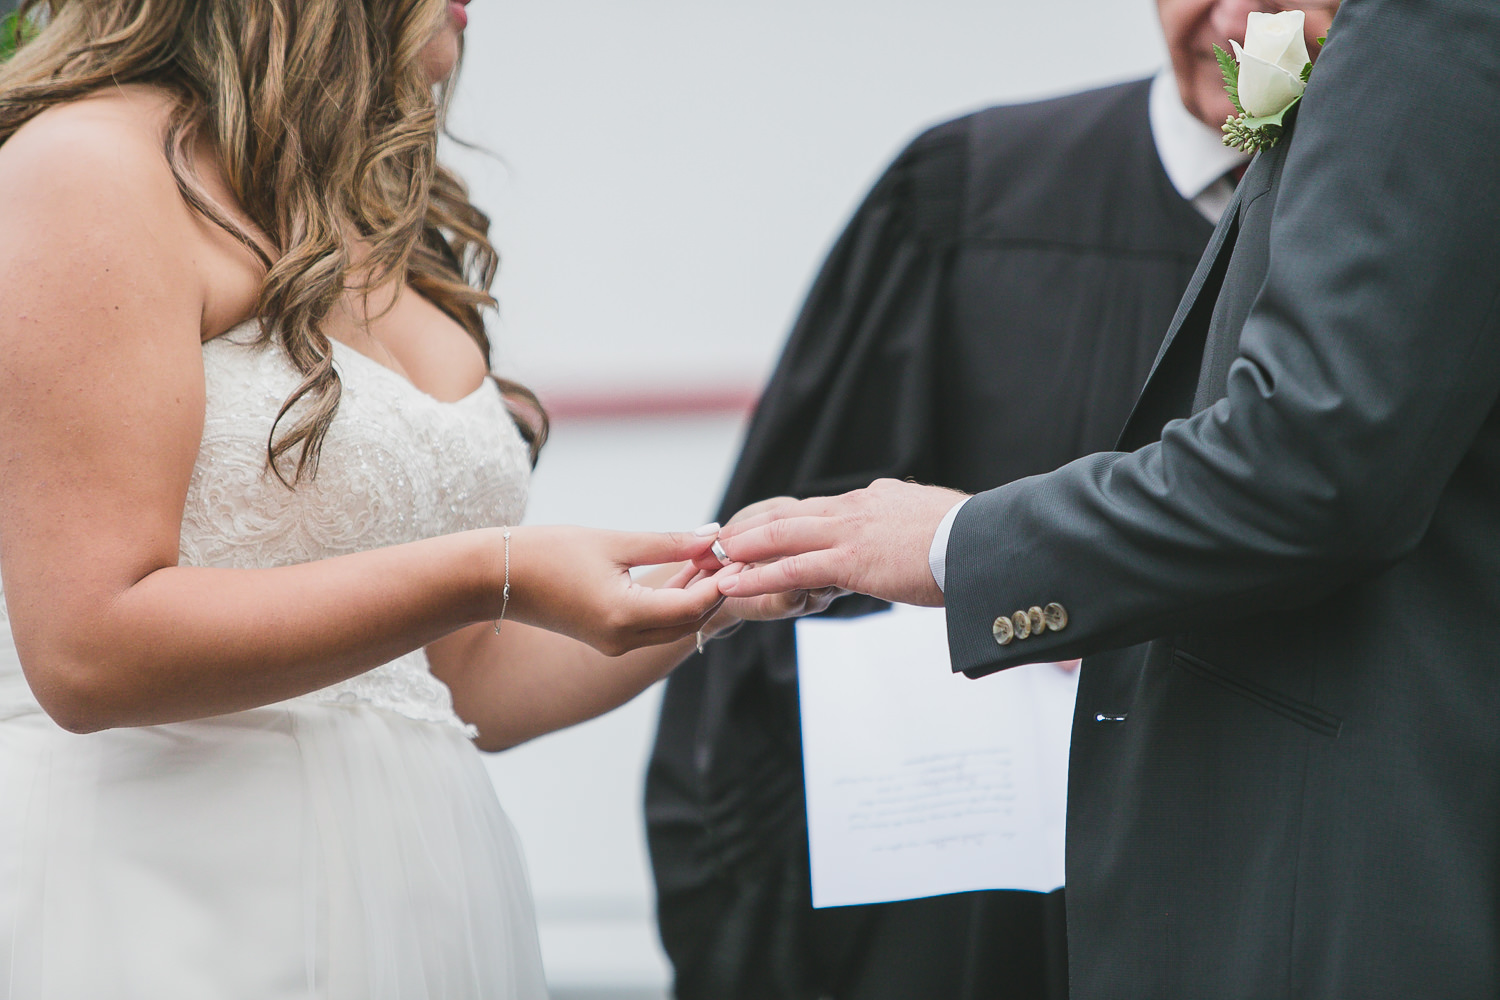 ring exchange at richmond wedding ceremony